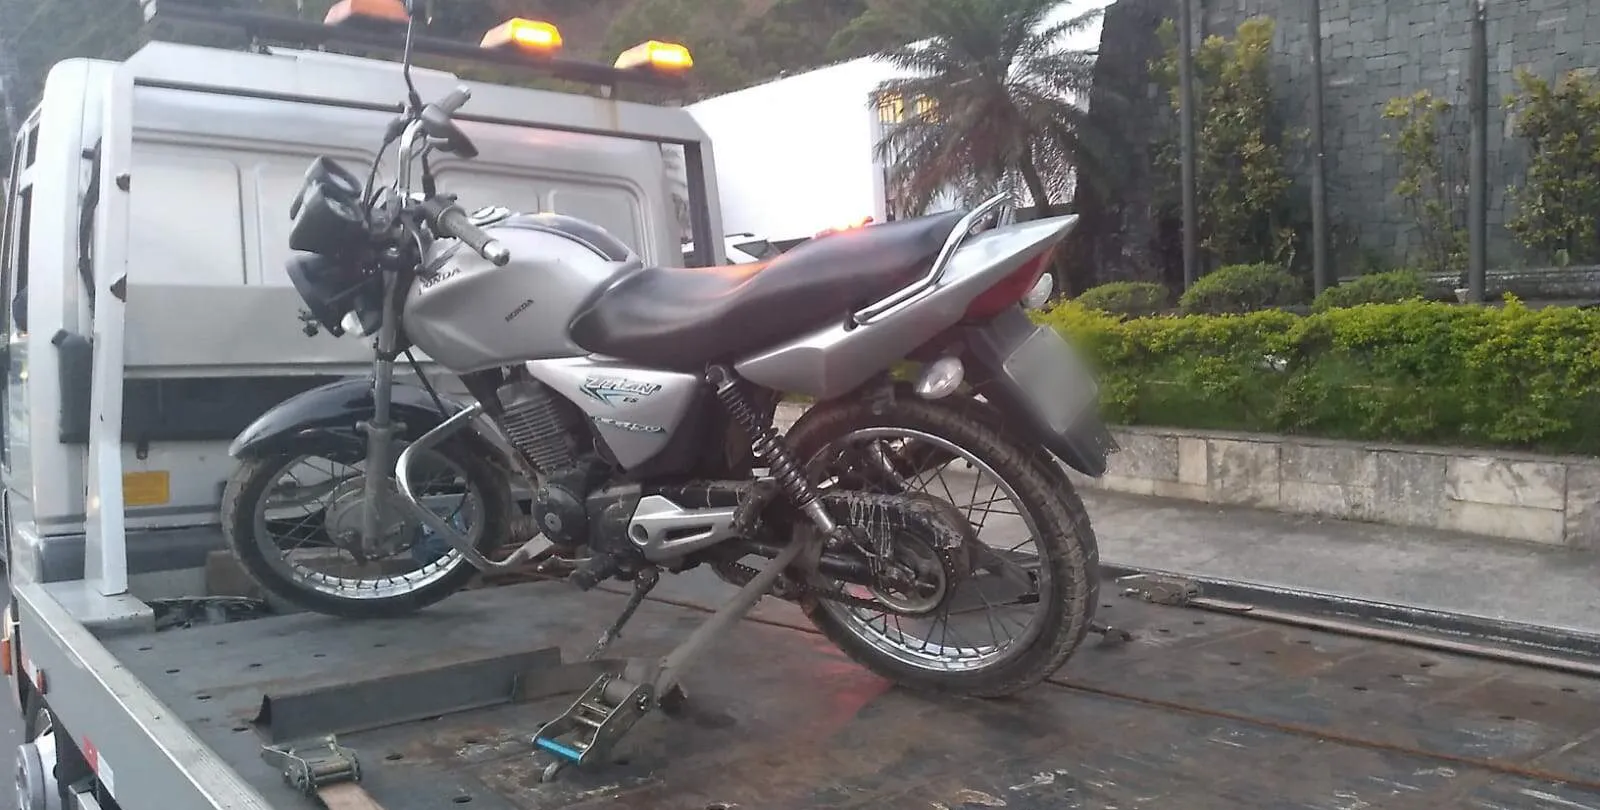  Motocicleta foi encontrada no Jardim Enseada nesta terça-feira (3) 